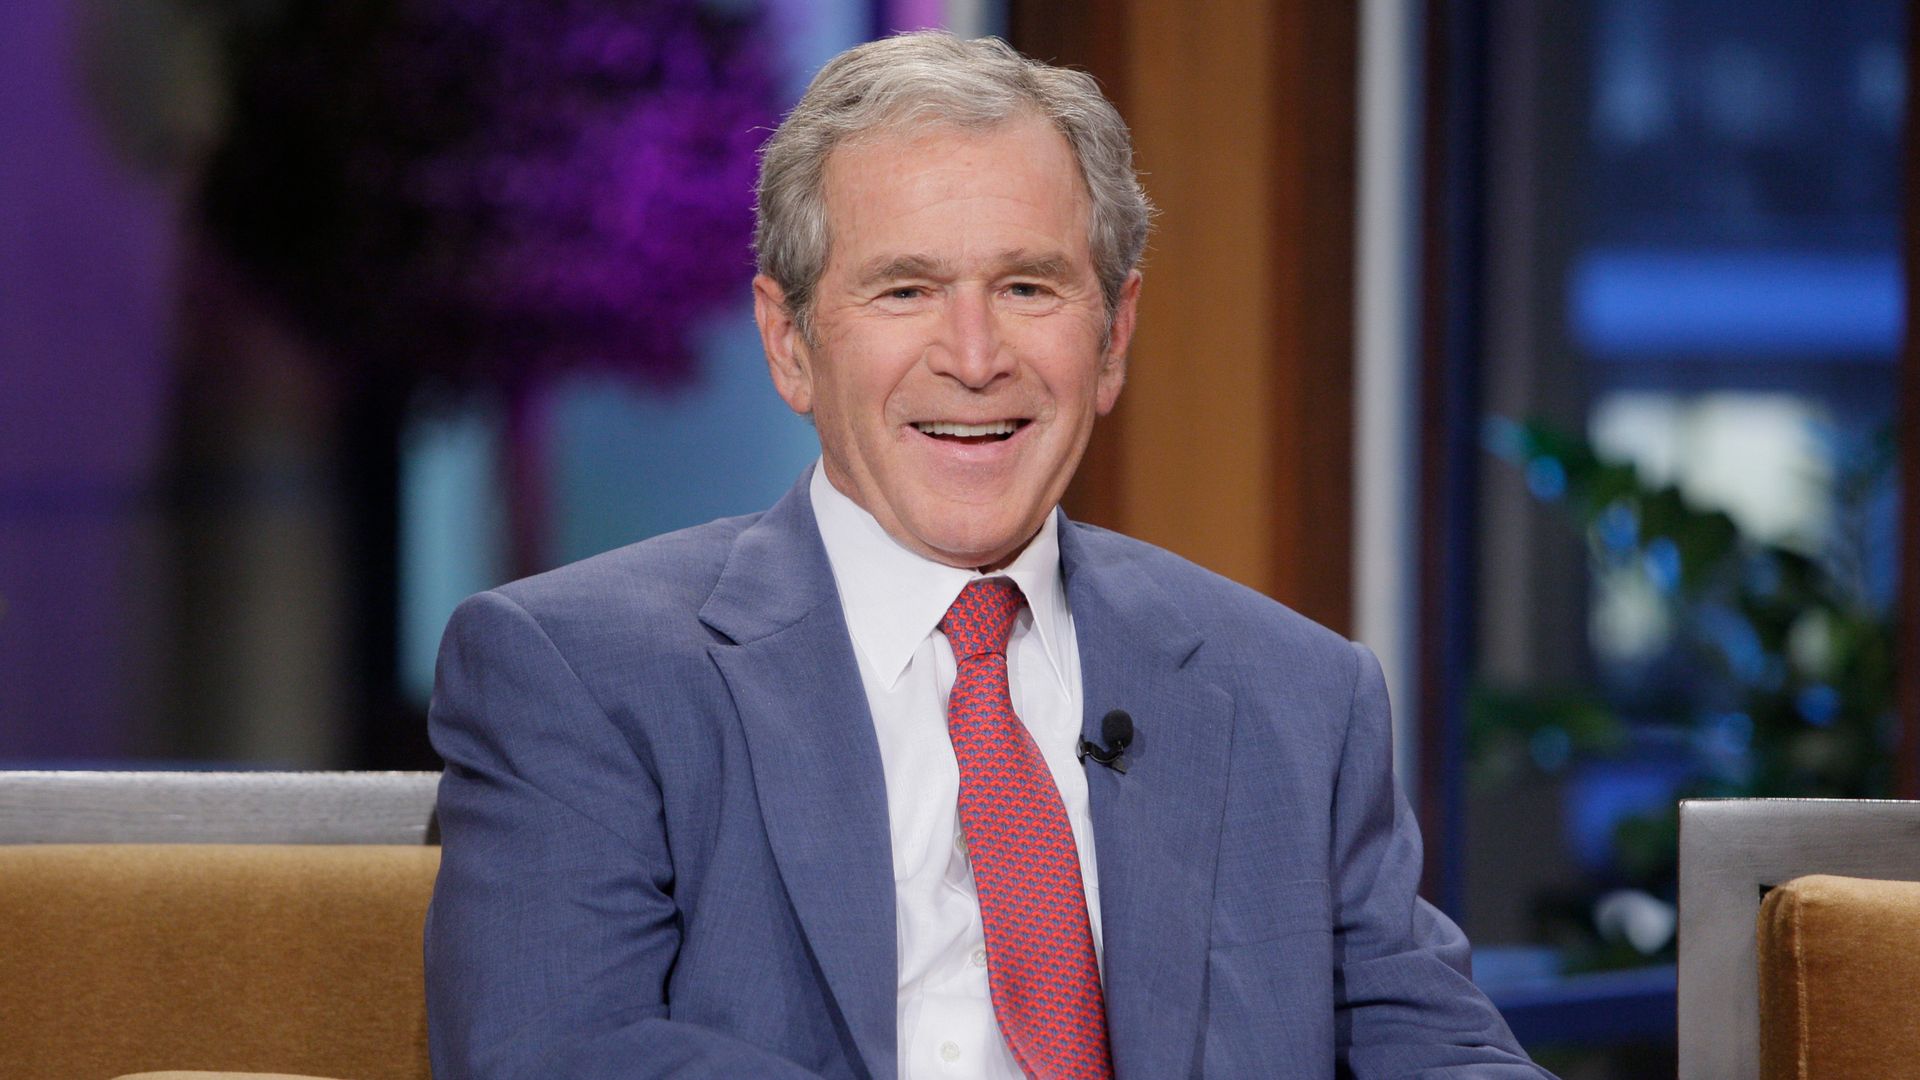 George W. Bush - Biography